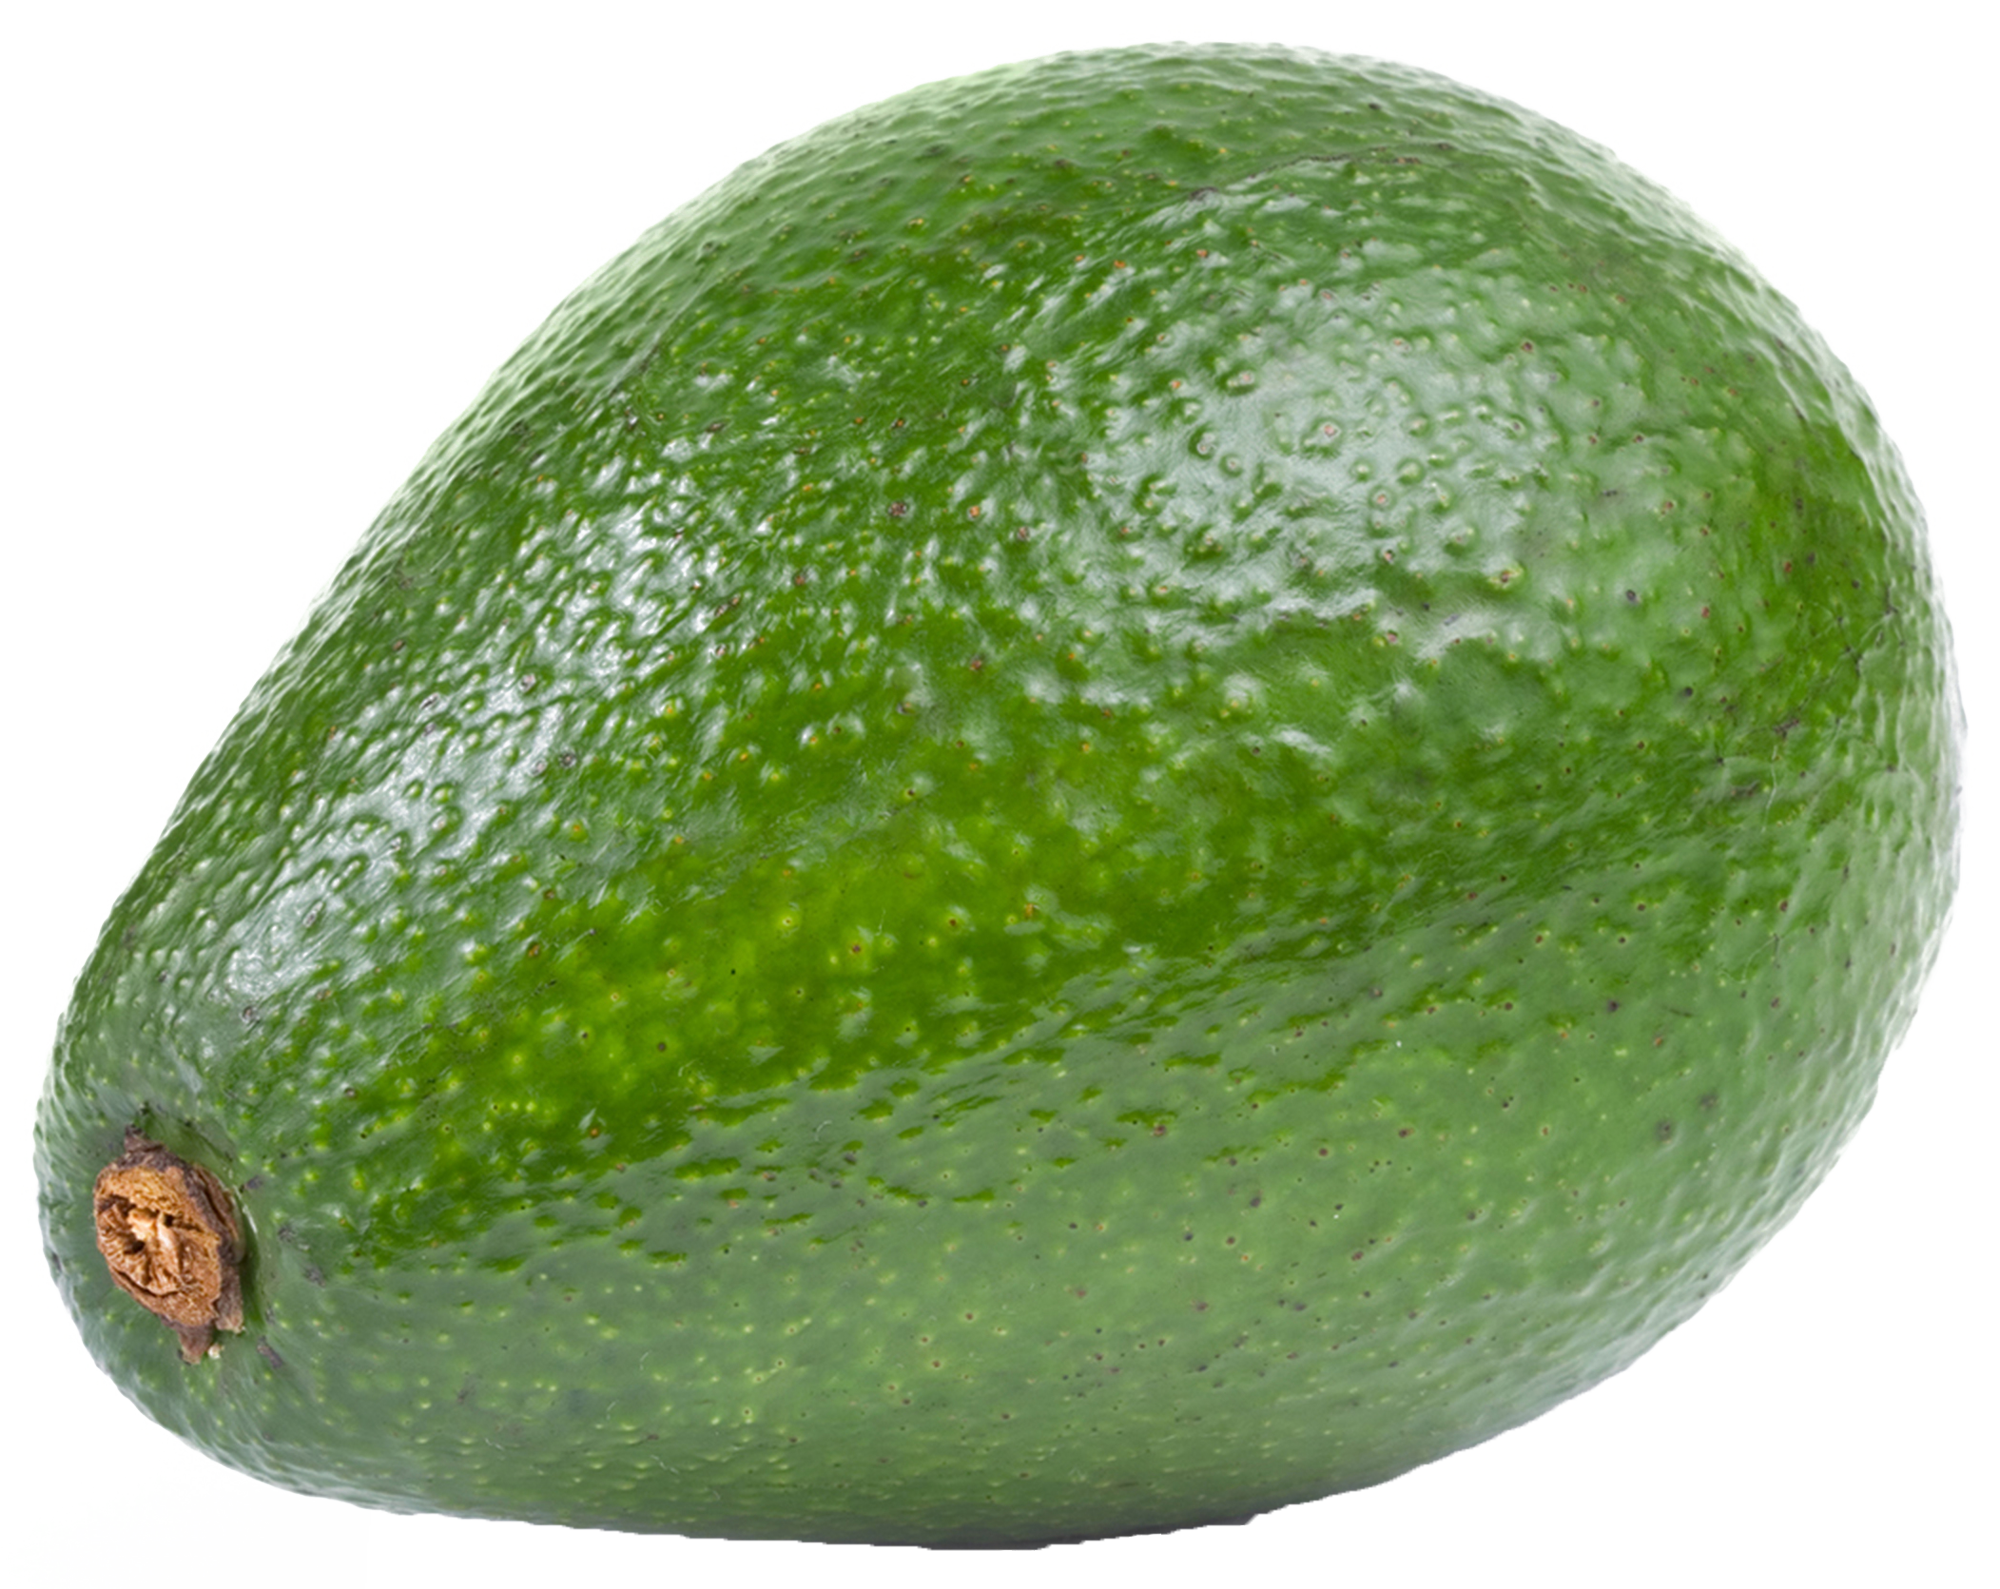 Avocado Png Image PNG Image